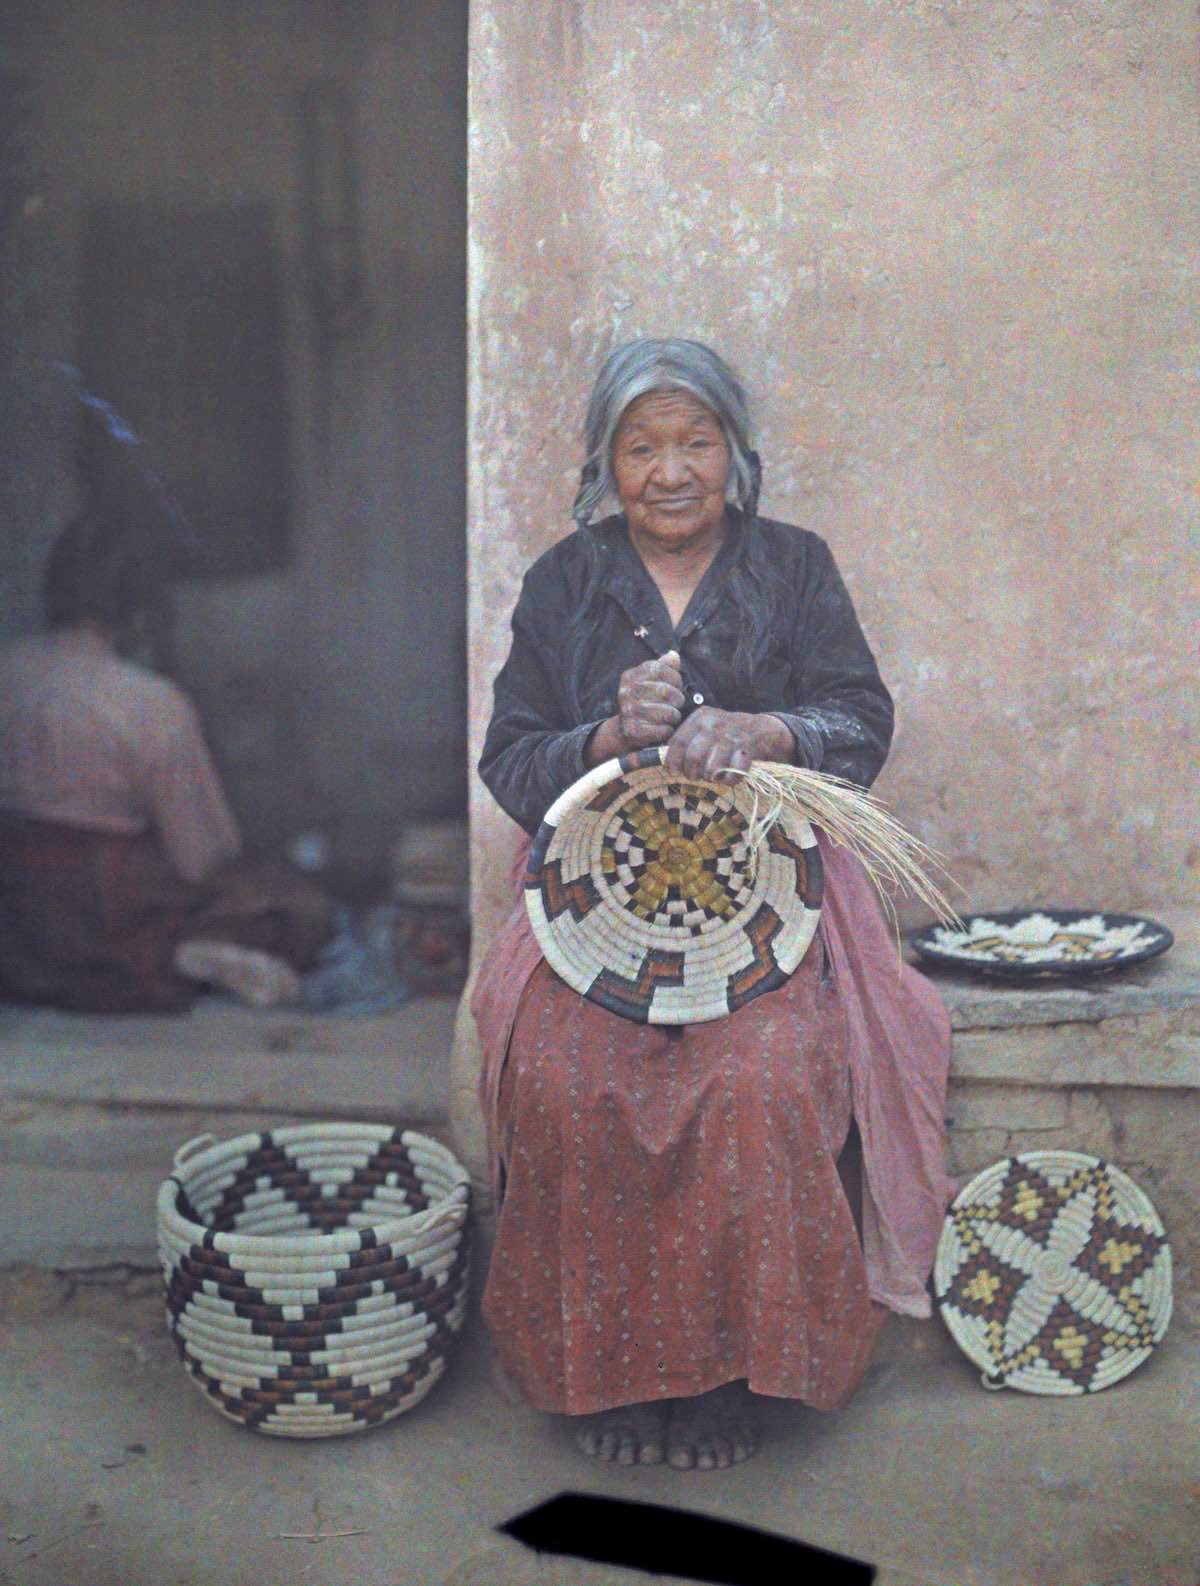 Portrait of a Hopi Indian woman weaving a basket.